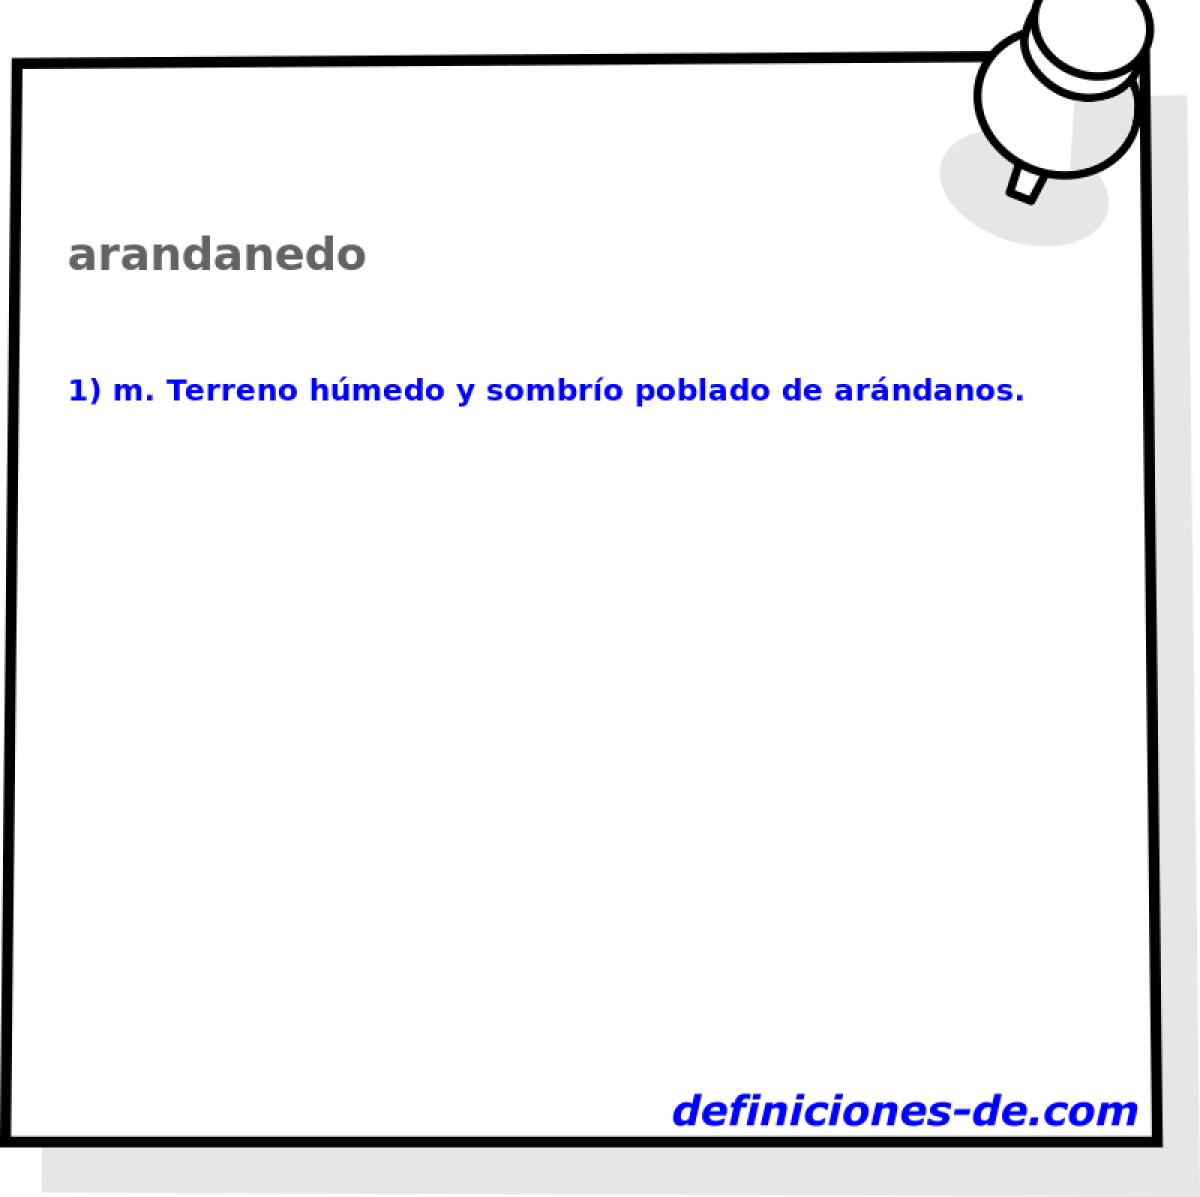 arandanedo 